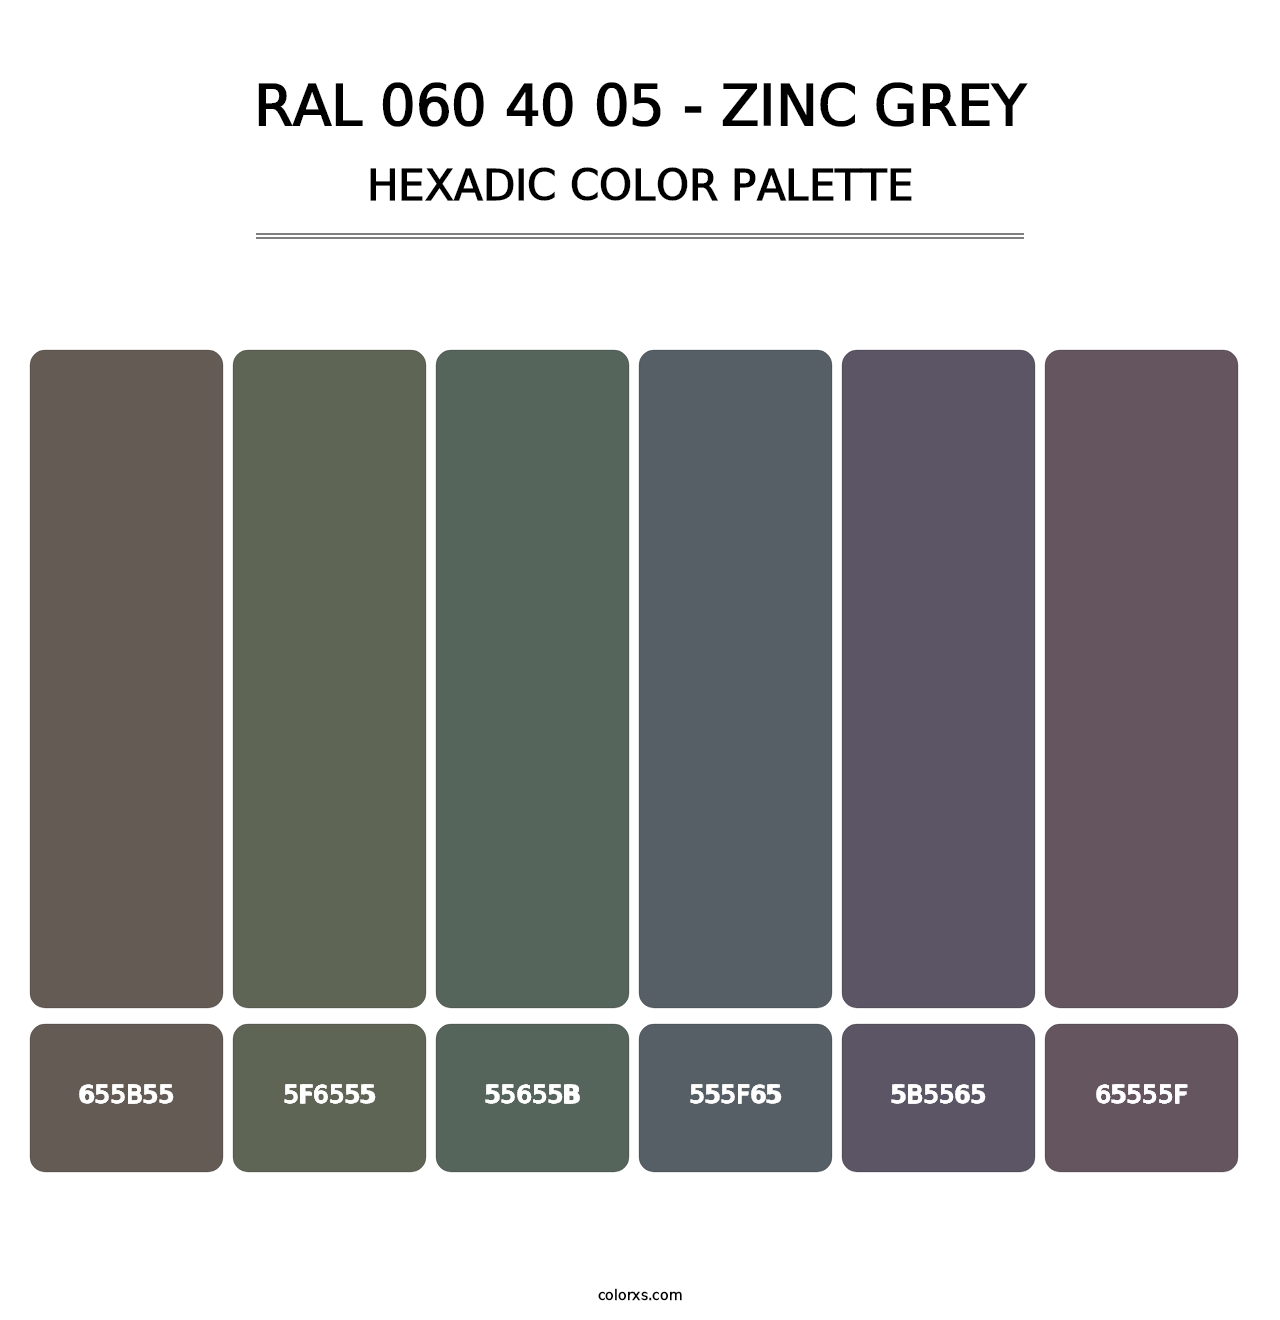 RAL 060 40 05 - Zinc Grey - Hexadic Color Palette